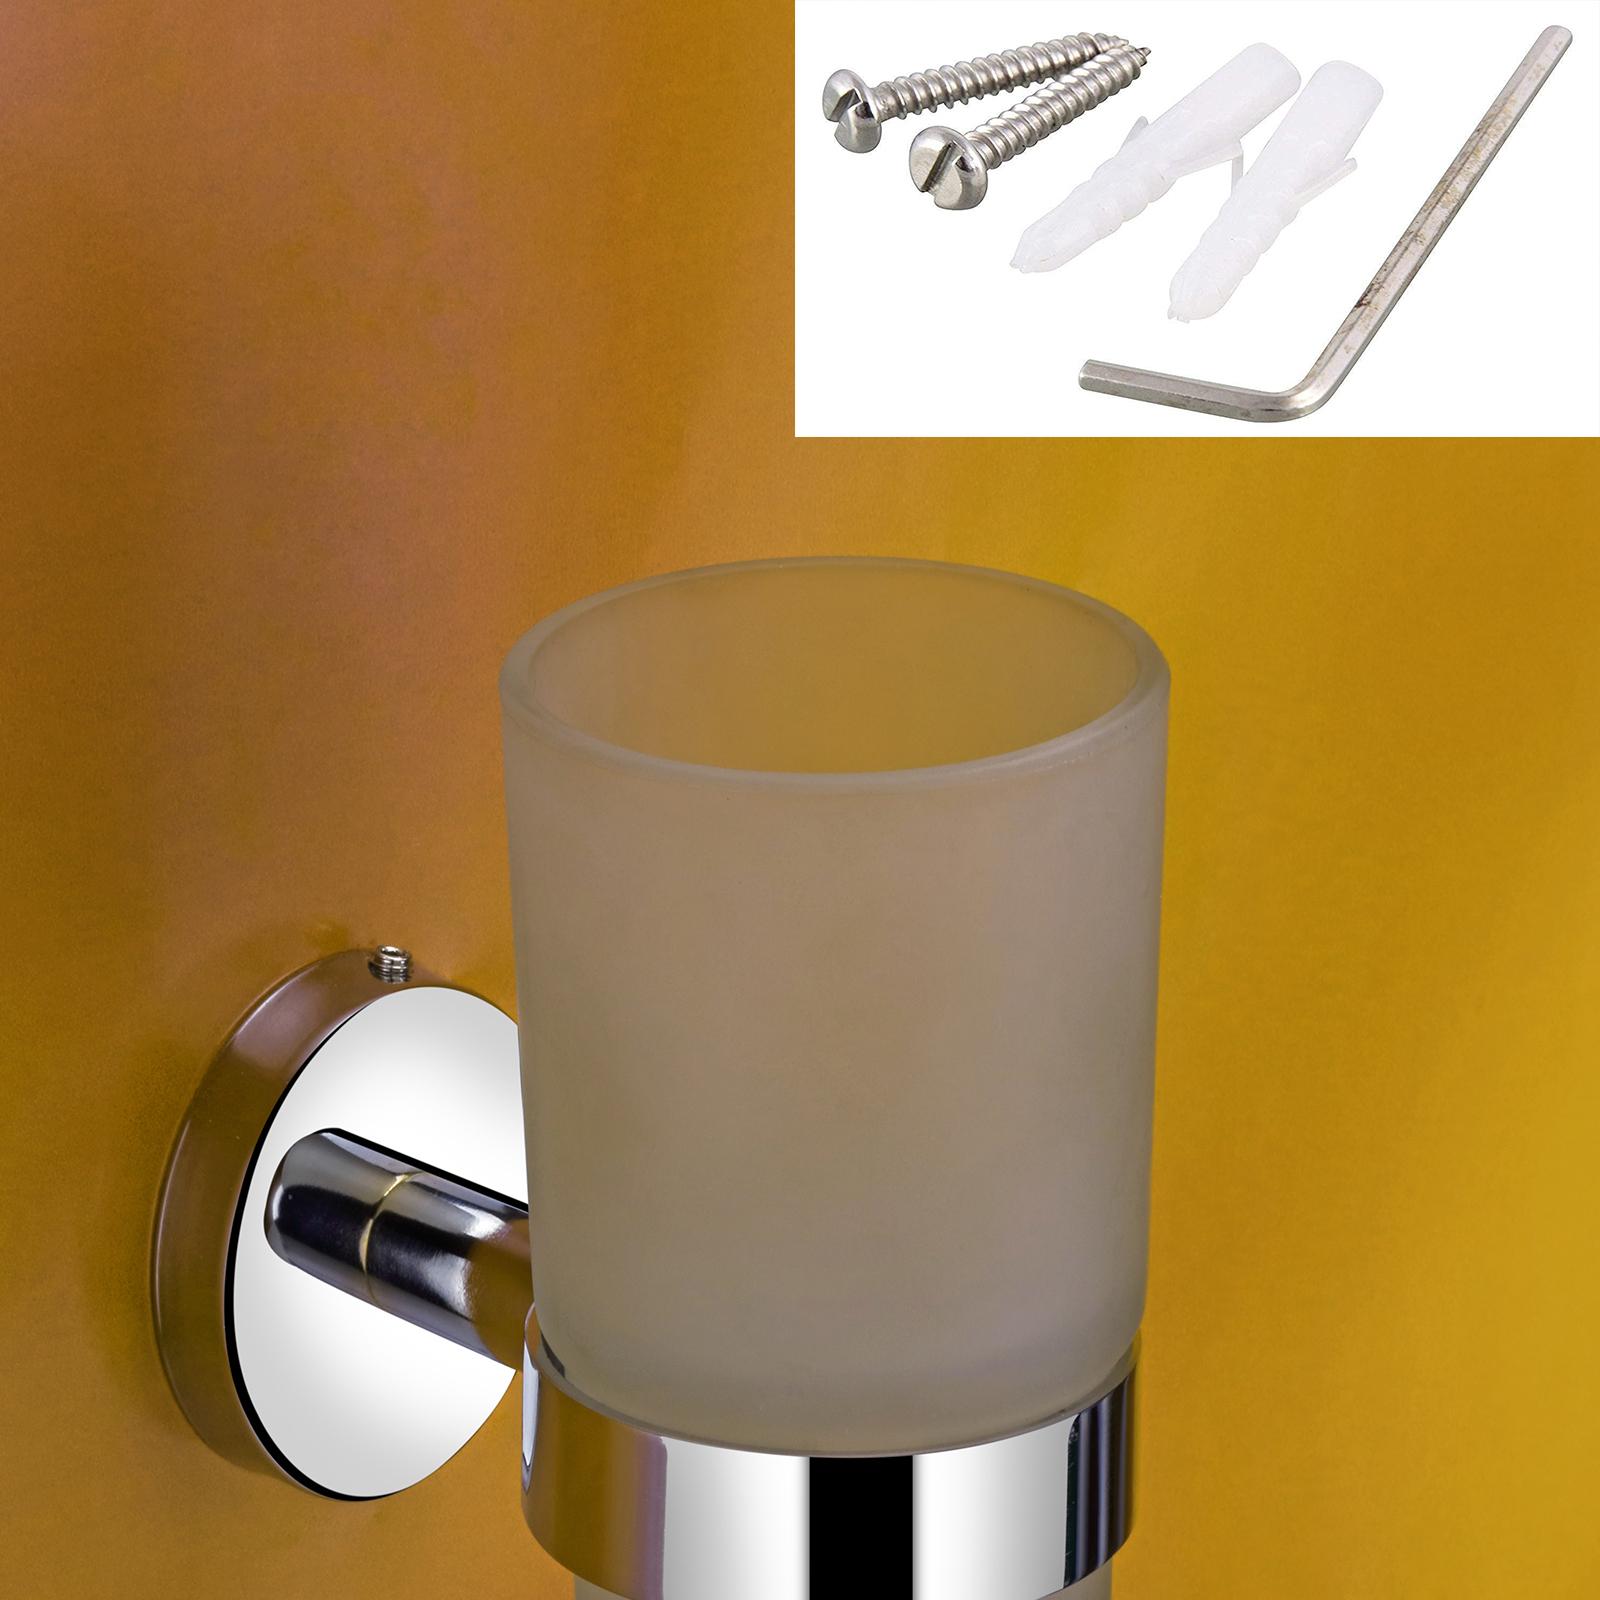 Drinking Glass Tumbler or Toothbrush Holder Chrome Mordern Bathroom Accessory 